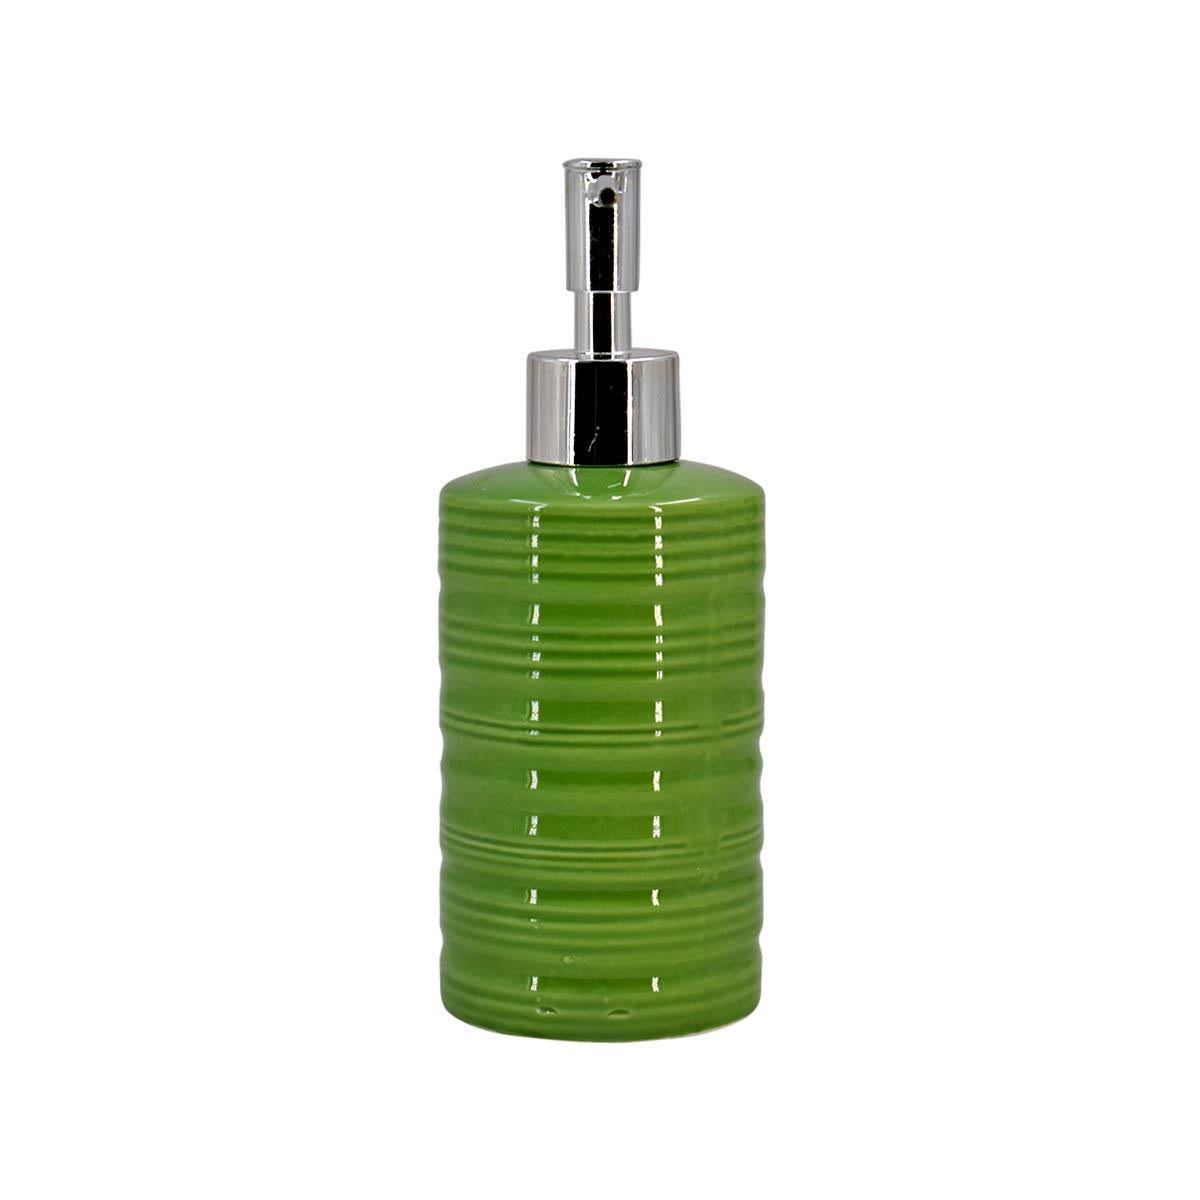 Ceramic Soap Dispenser Pump for Bathroom for Bath Gel, Lotion, Shampoo (7974)